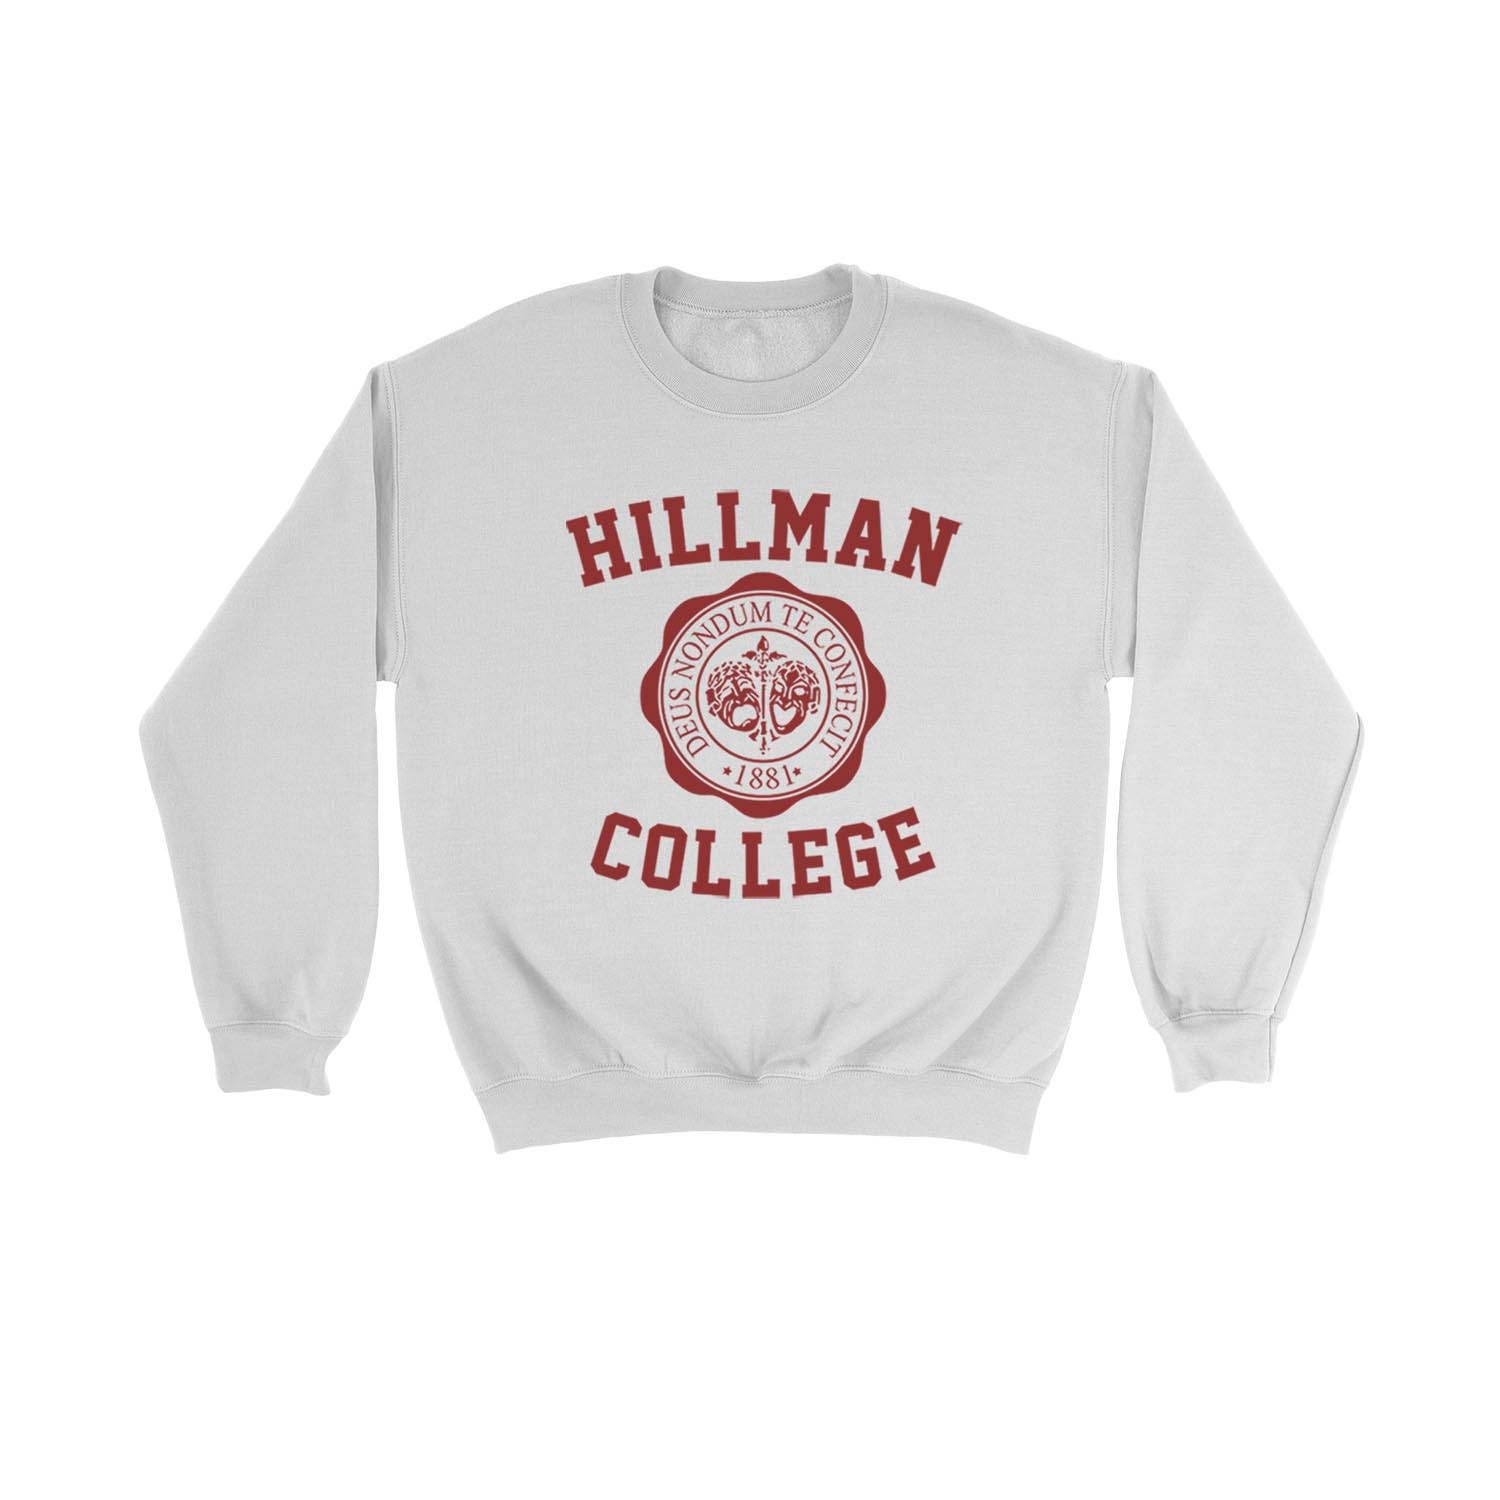 Hillman College Sweatshirt alumni student spiritwear